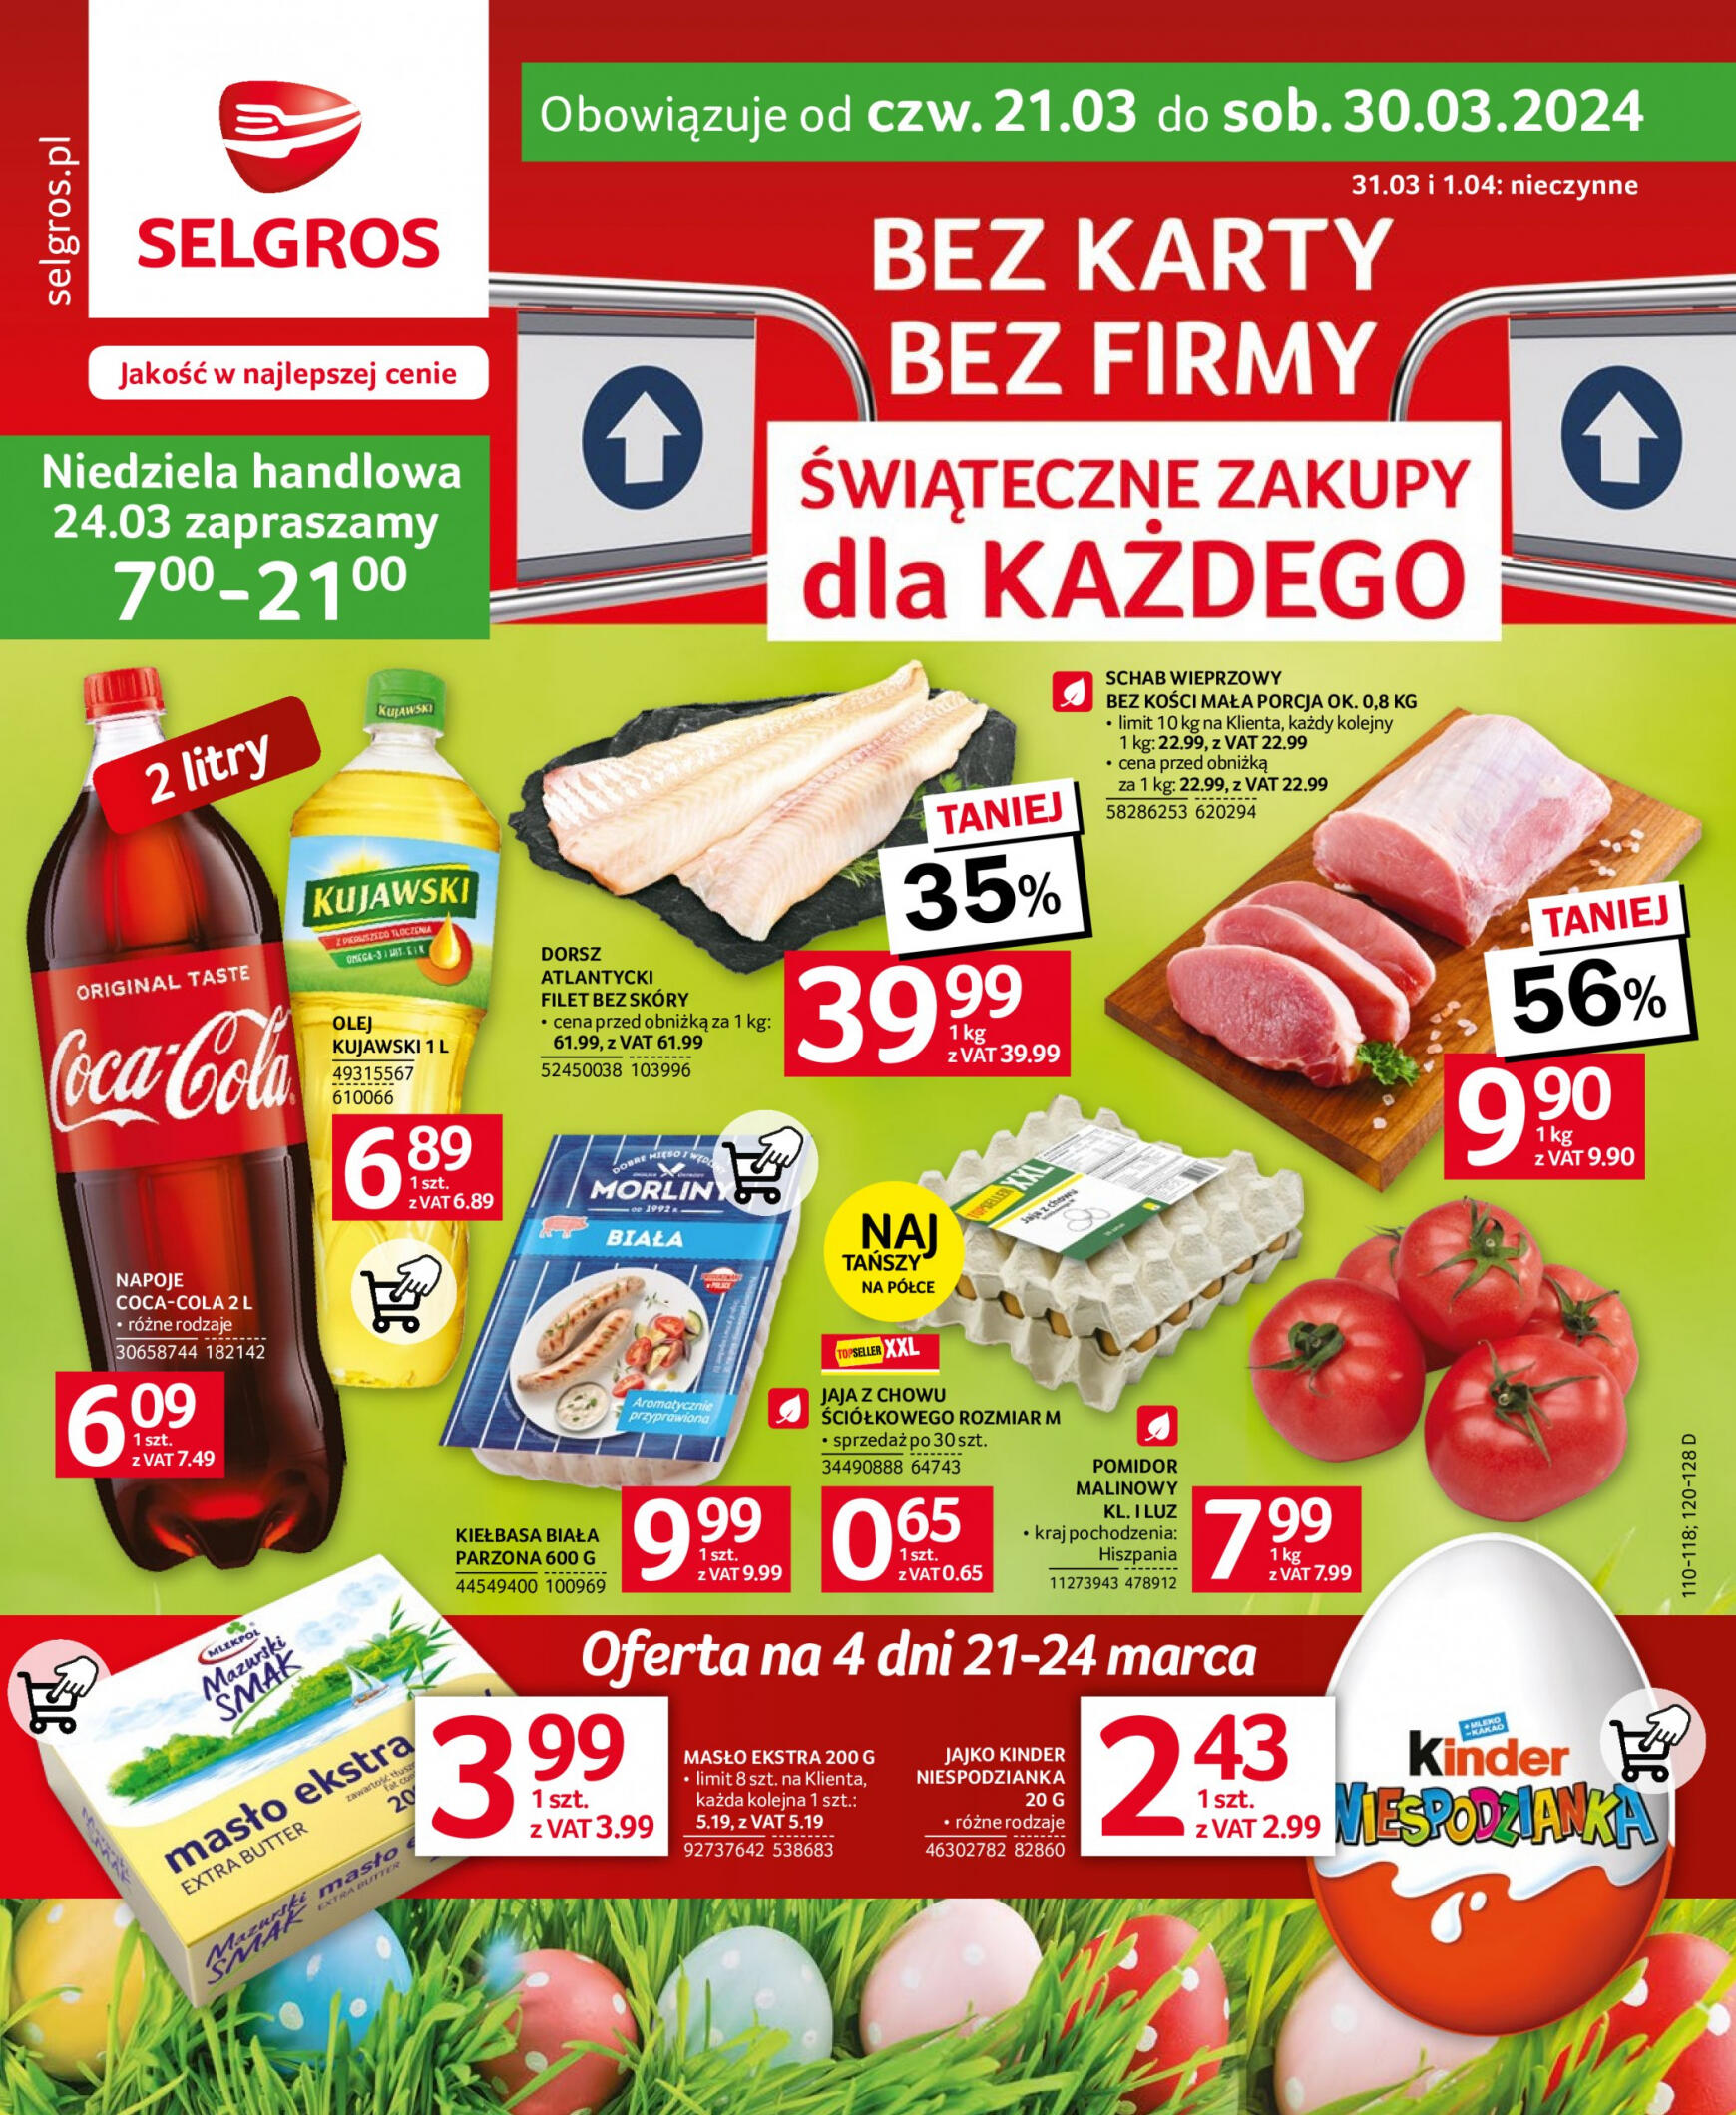 selgros - Selgros cash&carry - Selgros Food obowiązuje od 21.03.2024